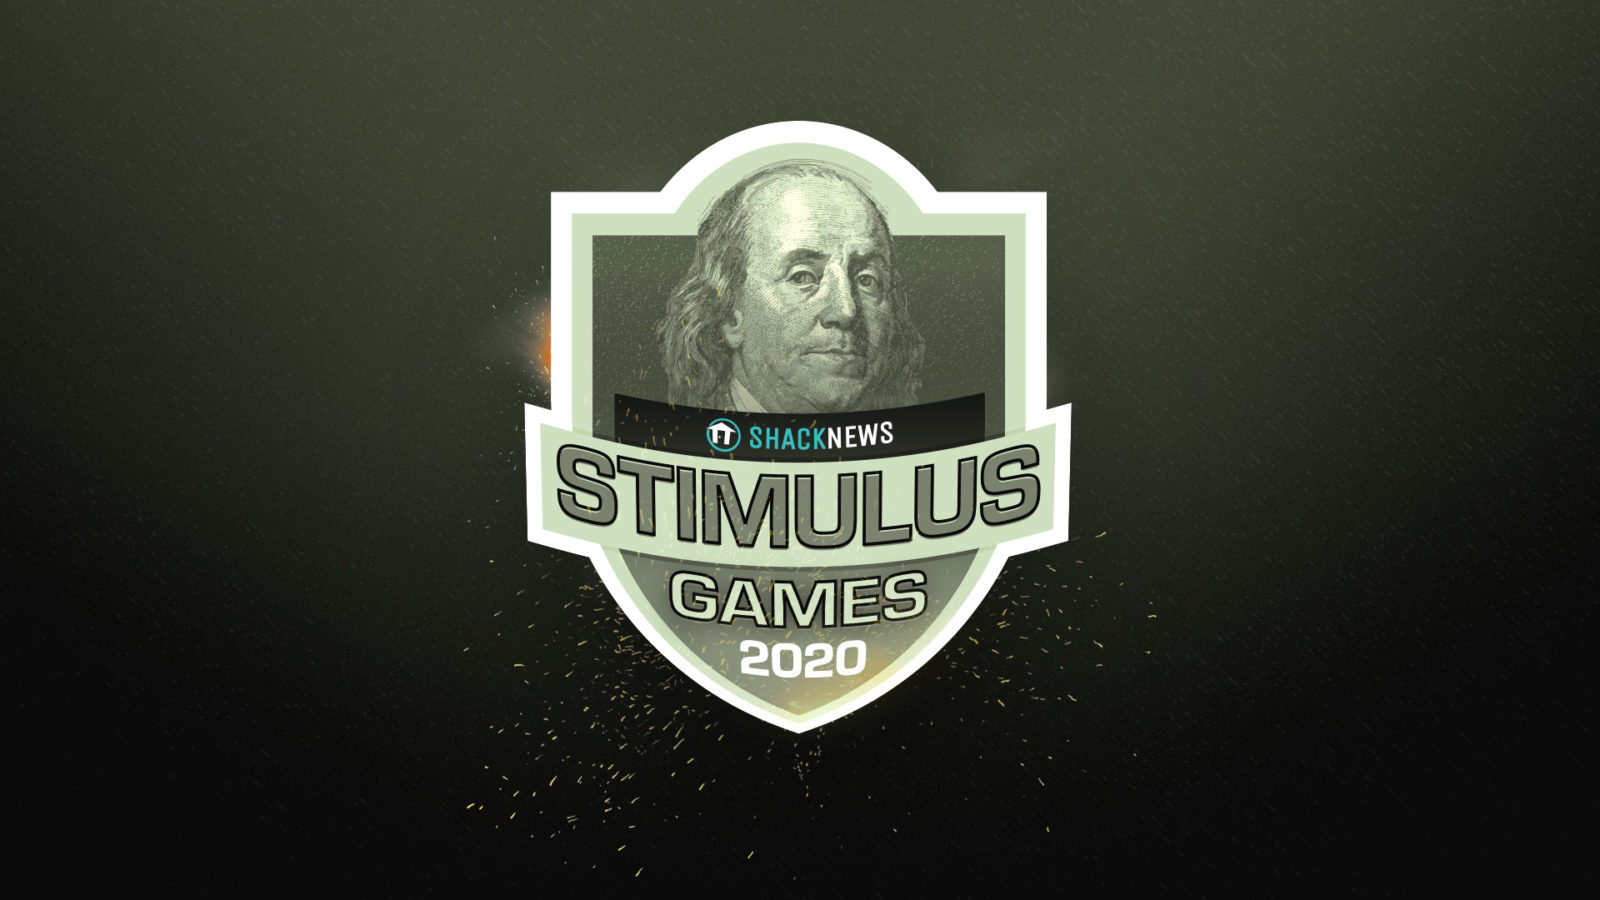 Shacknews Stimulus Games 2020 - Shackbattle сообщества Rocket League